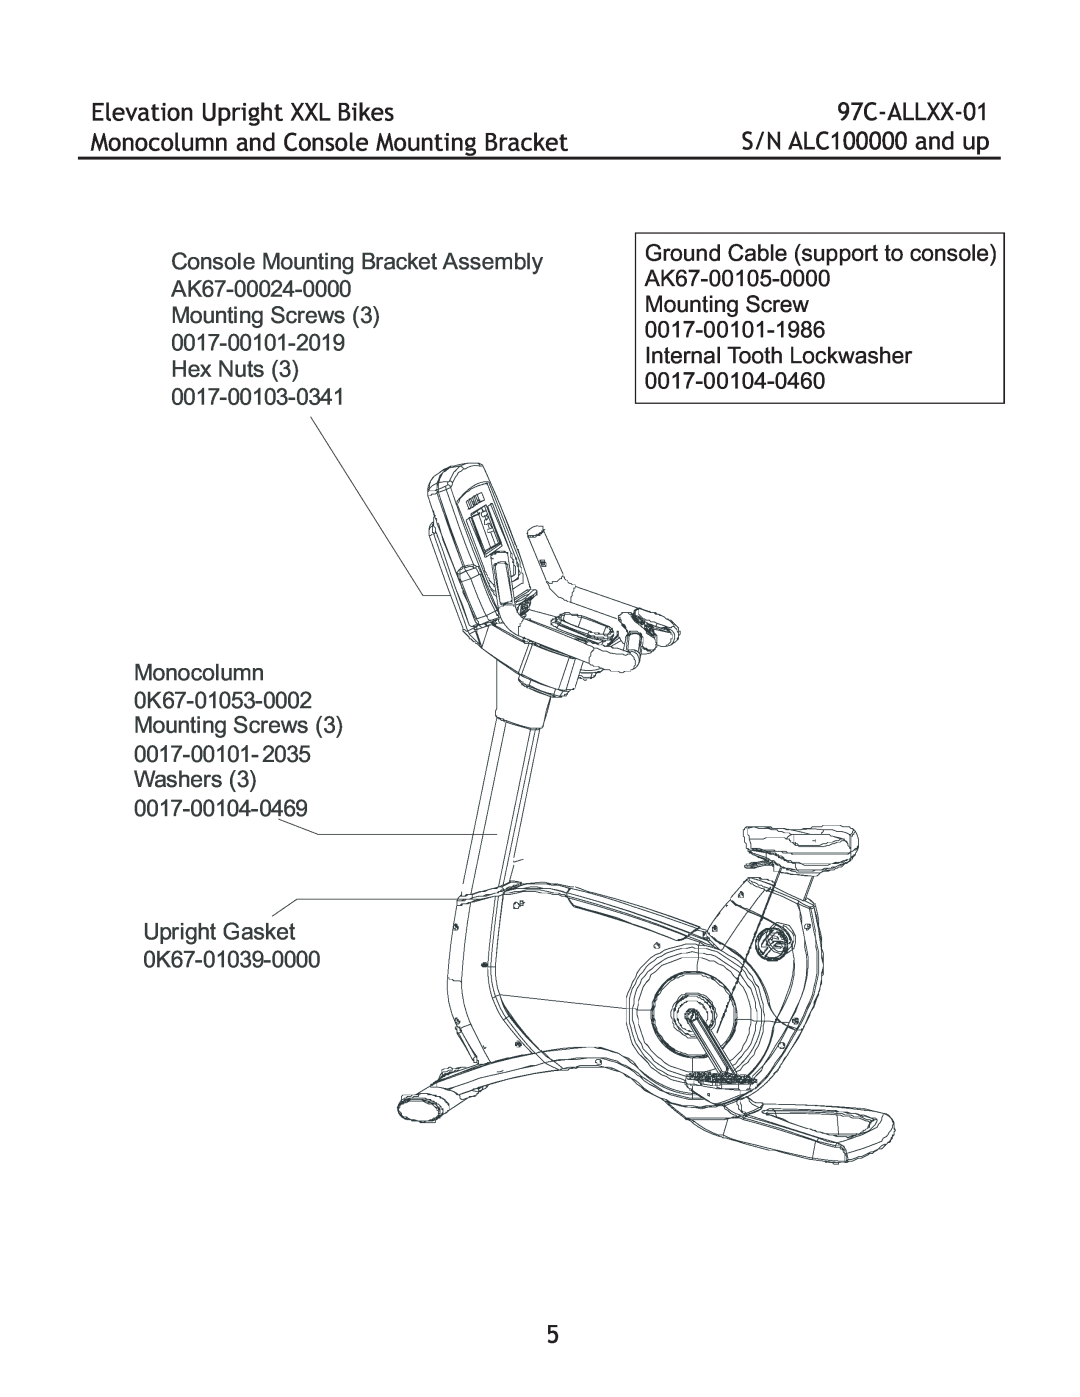 Life Fitness 97C-ALLXX-01 manual Elevation Upright XXL Bikes Monocolumn and Console Mounting Bracket 